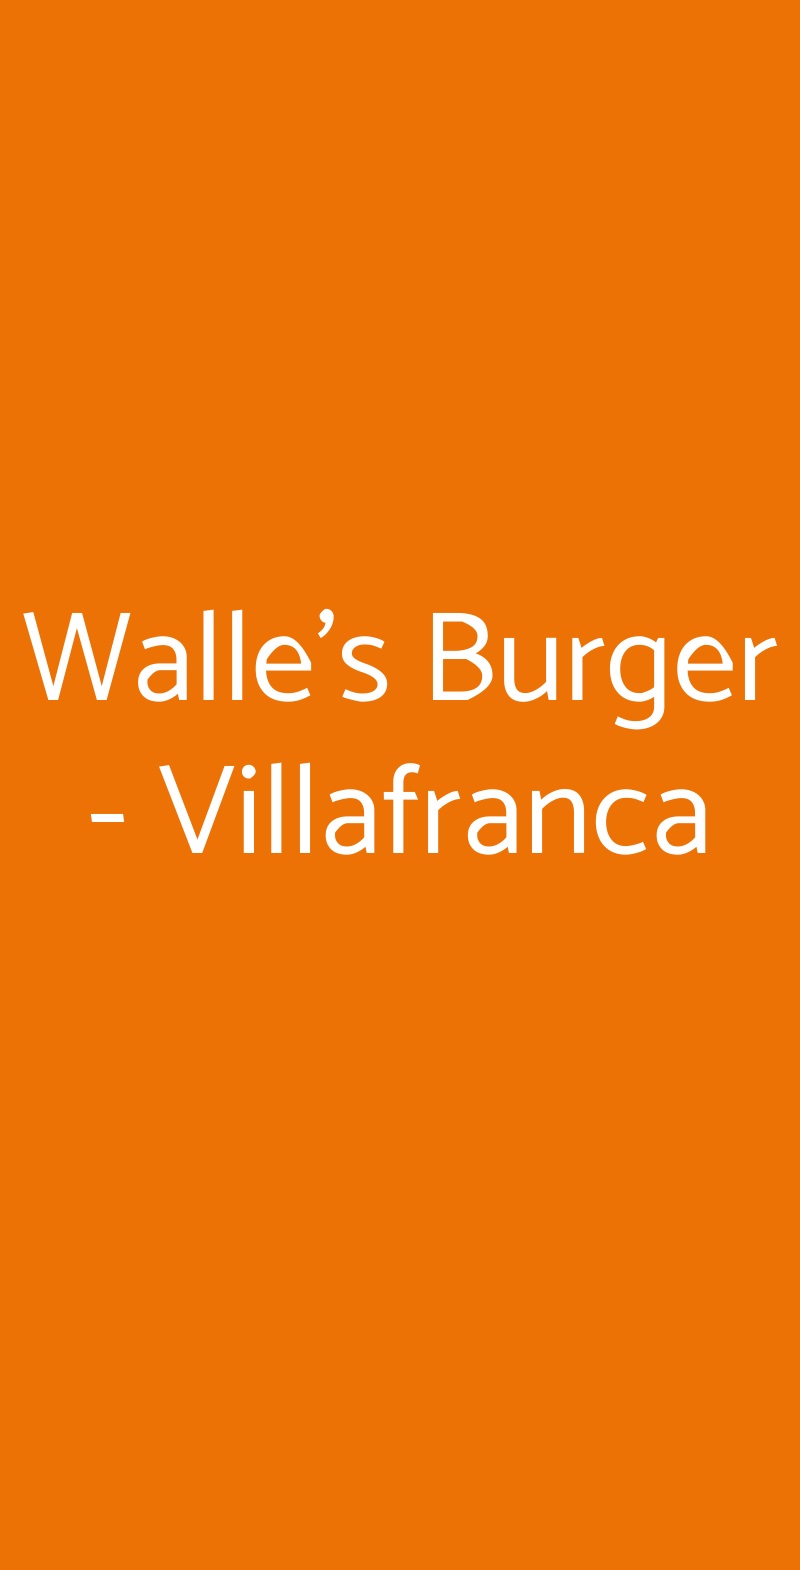 Walle's Burger - Villafranca Villafranca di Verona menù 1 pagina